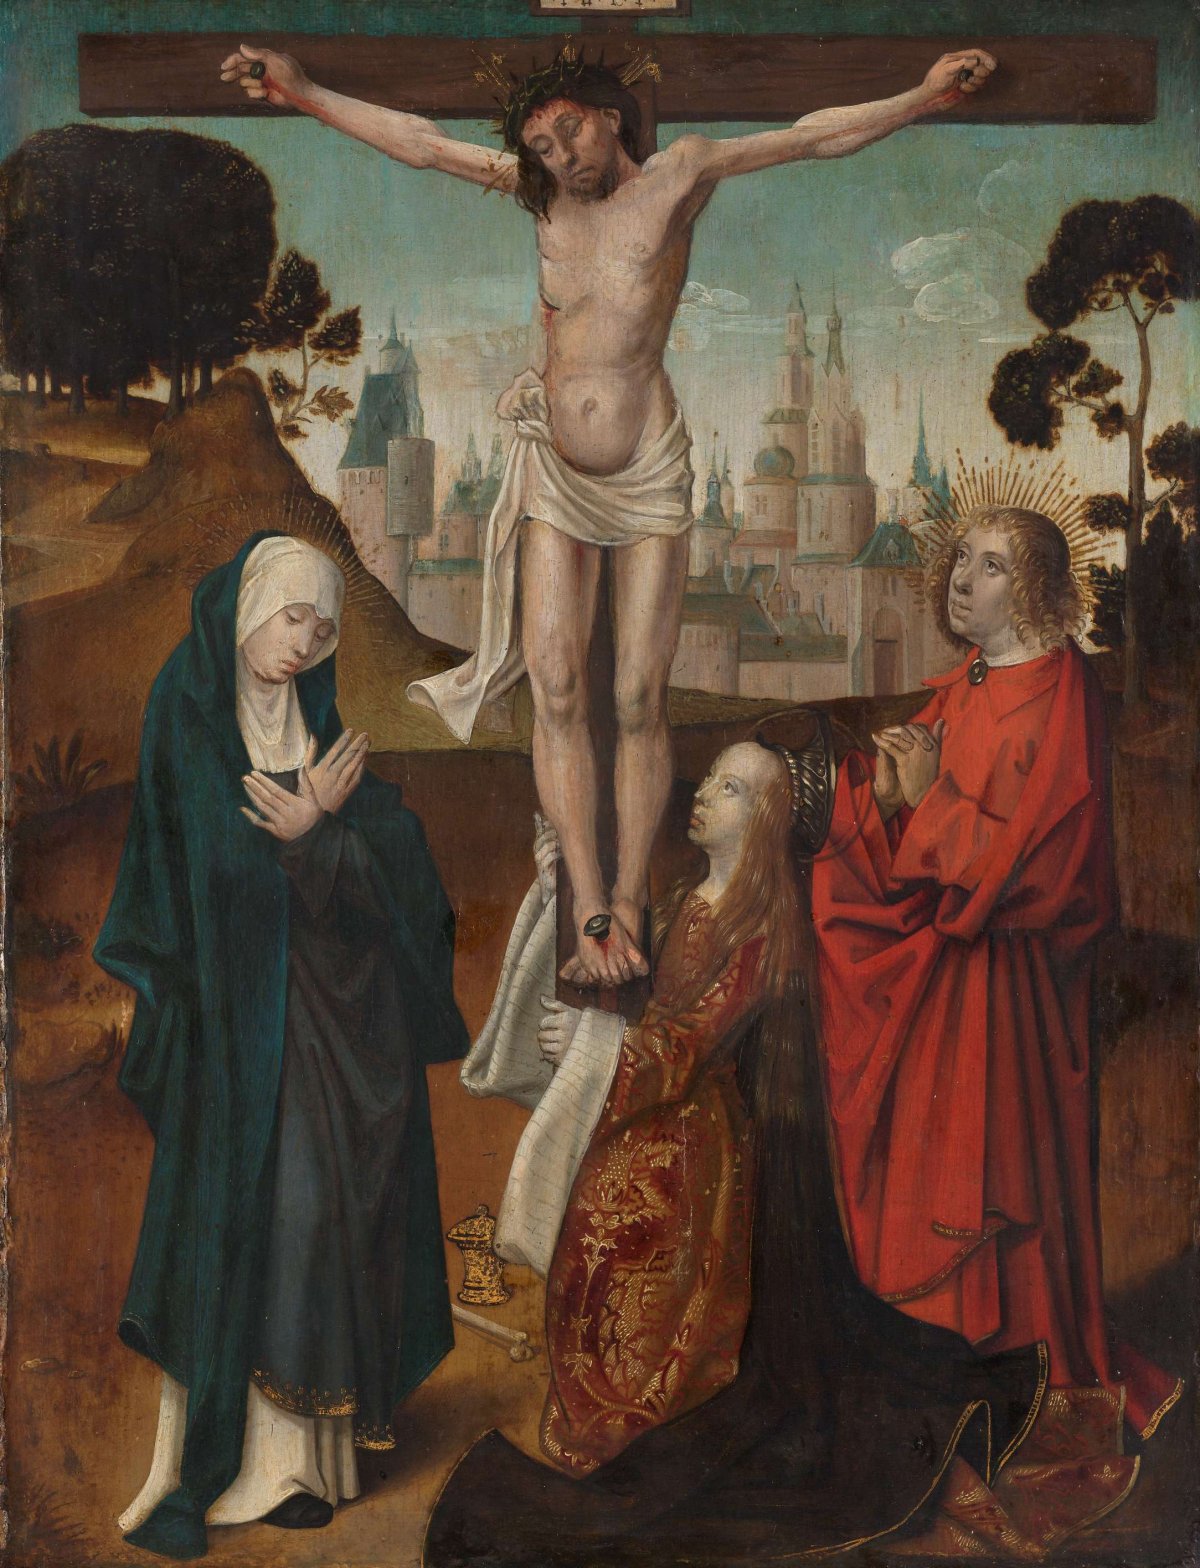 Crucifixion, Cornelis Engebrechtsz, c. 1510 - c. 1520